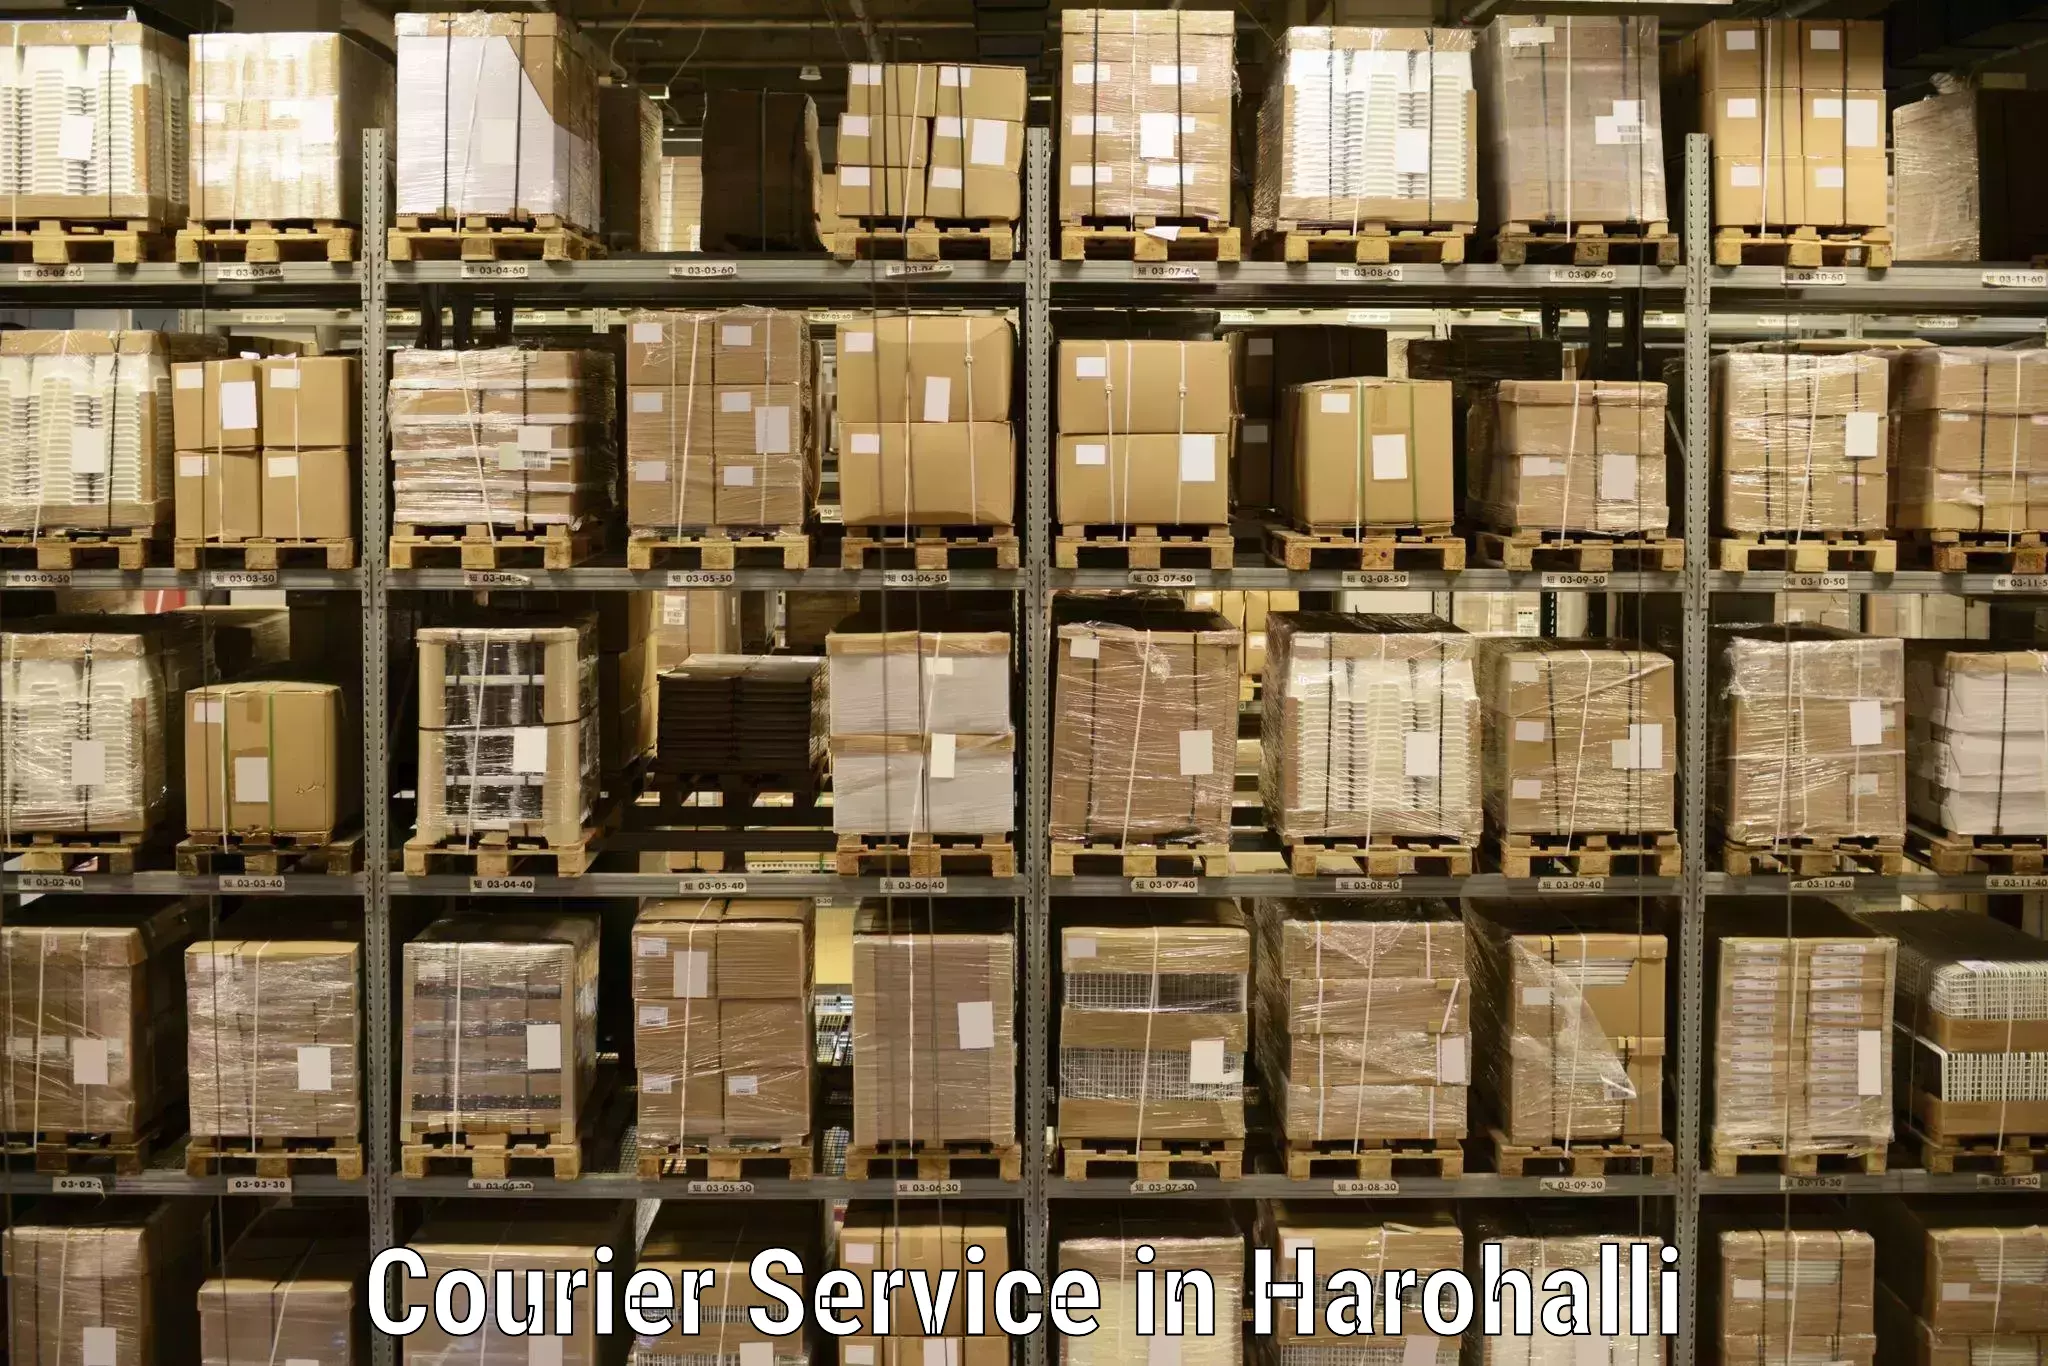 High-priority parcel service in Harohalli